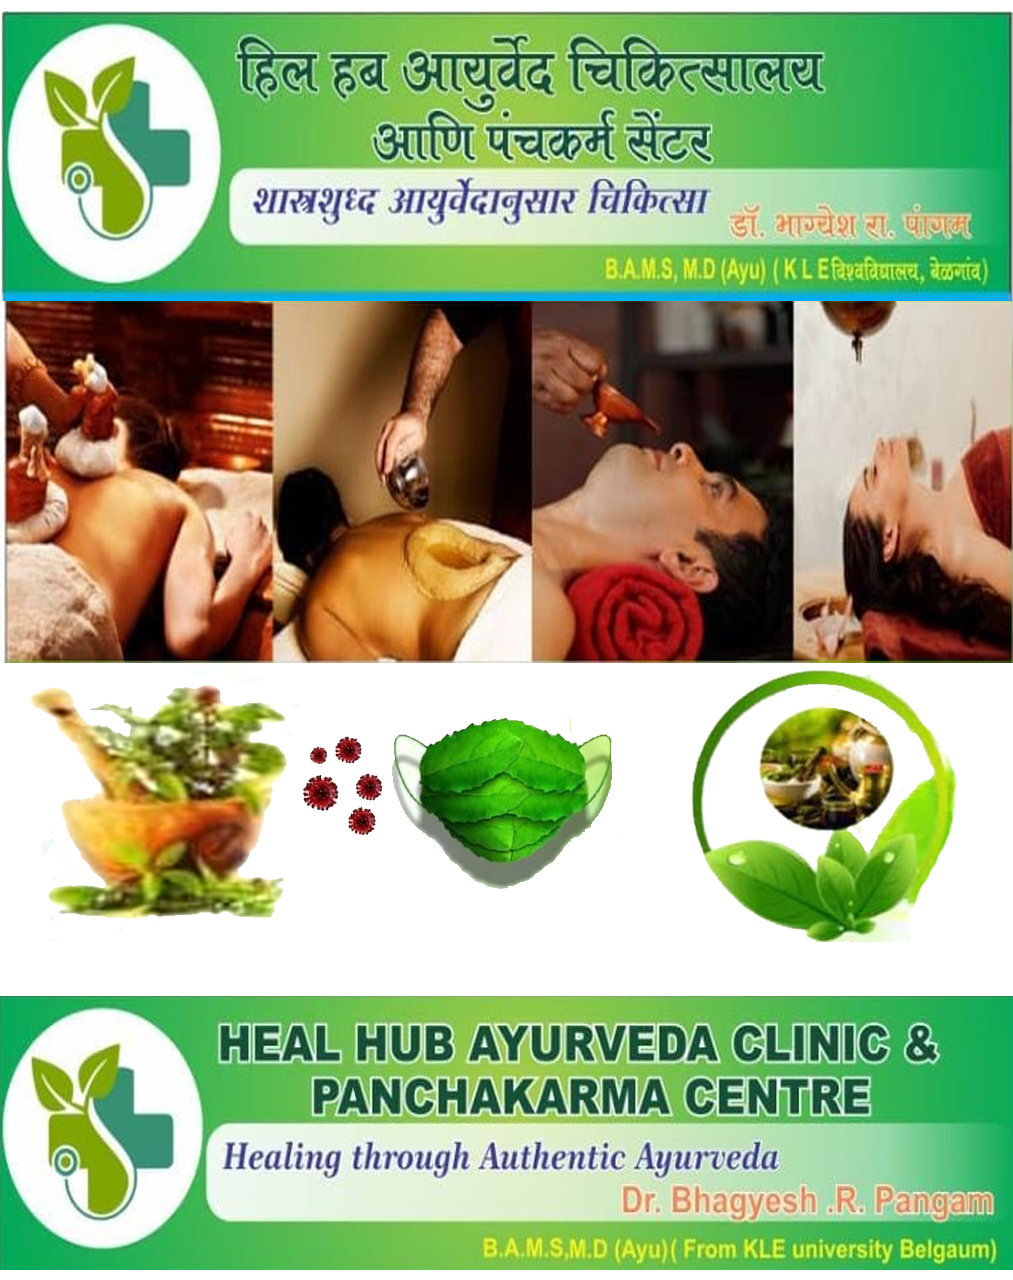 हिल हब आयुर्वेद चिकित्सालय आणि पंचकर्म सेंटर<br>HEAL HUB AYURVEDA CLINIC & PANCHAKARMA CENTRE| SolapurMall.com